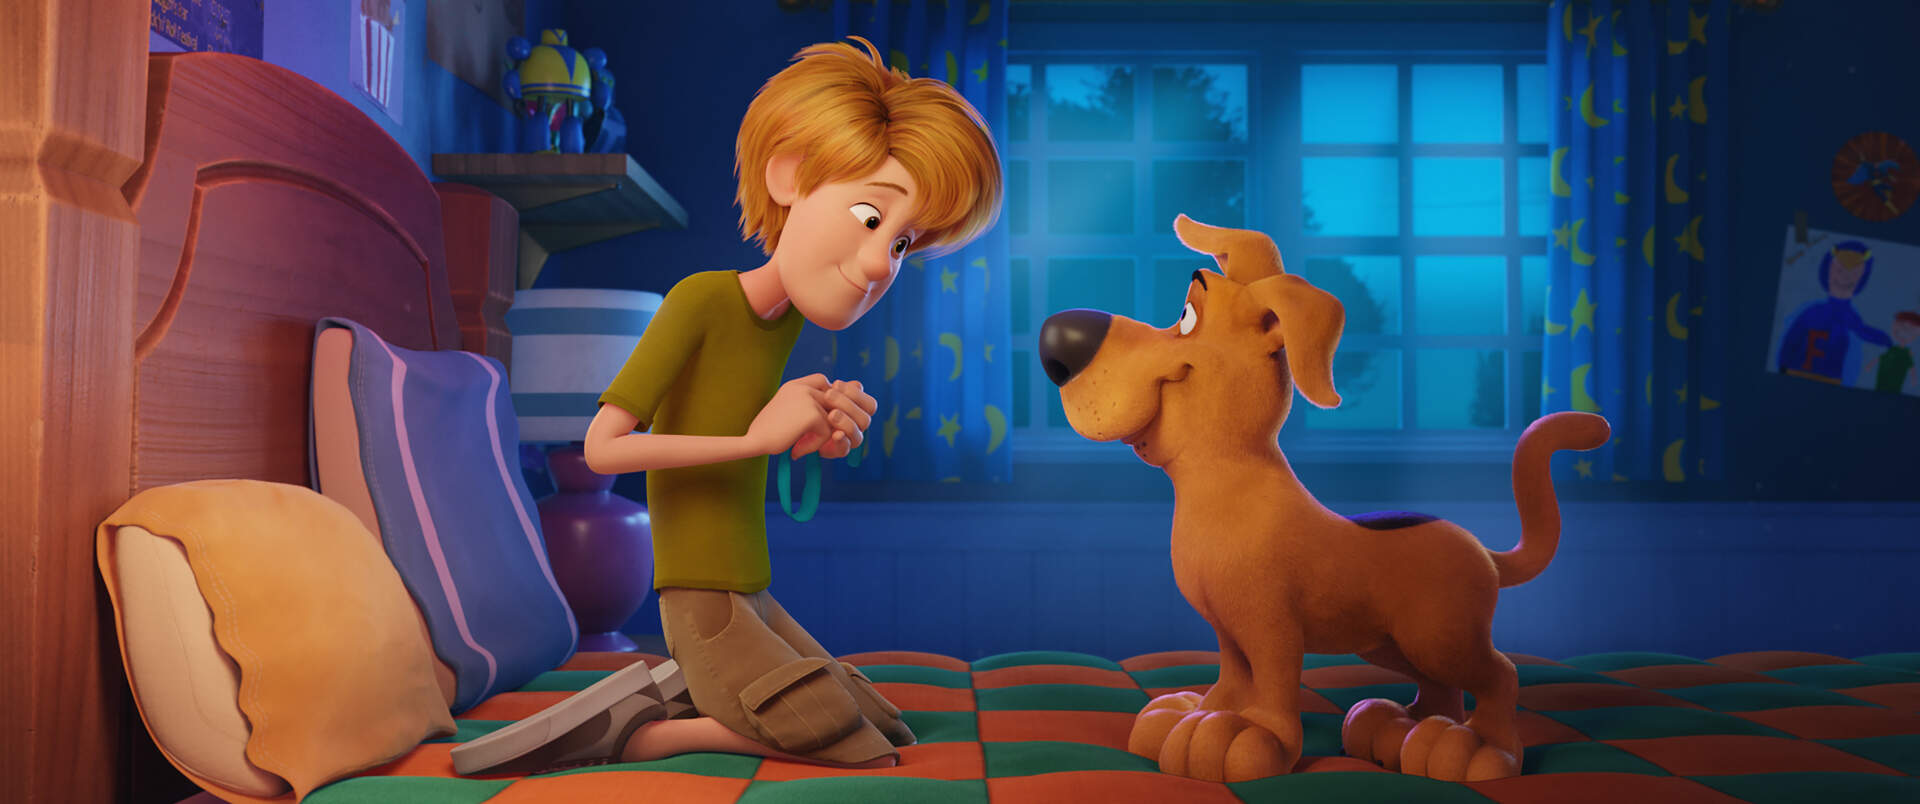 Scooby! - Szenenbild 6 von 6